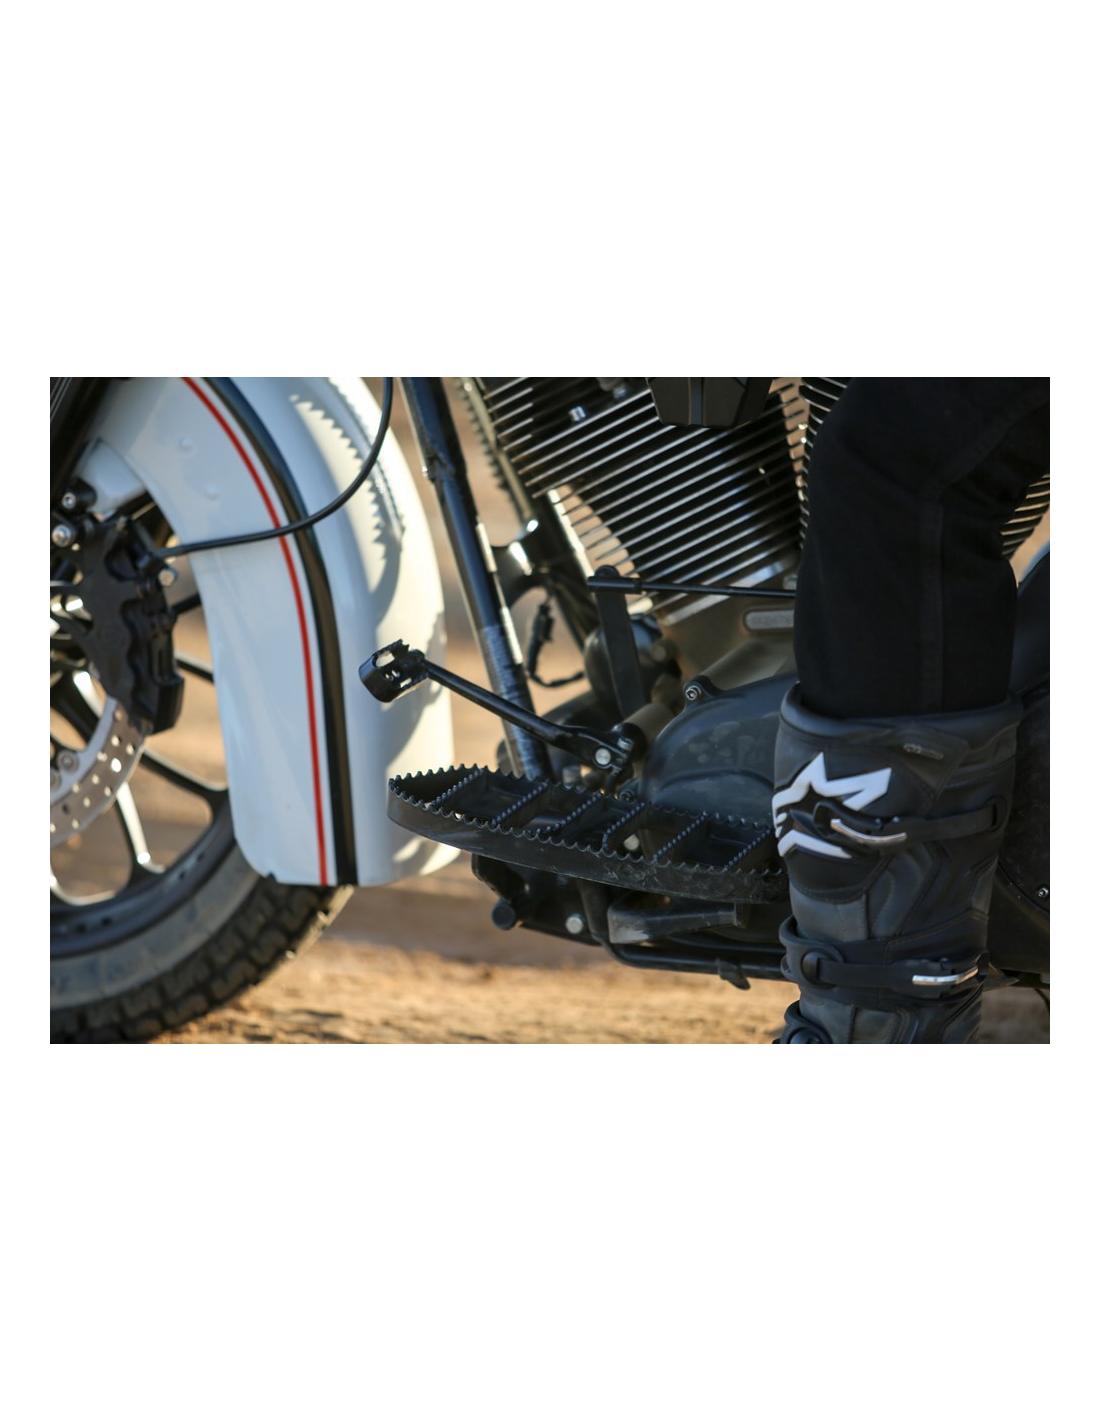 XMT-MOTO para estribo de pasajero estilo Streamliner y kit de montaje con  estriberas ajustables en ángulo corto para modelos Harley Davidson Touring